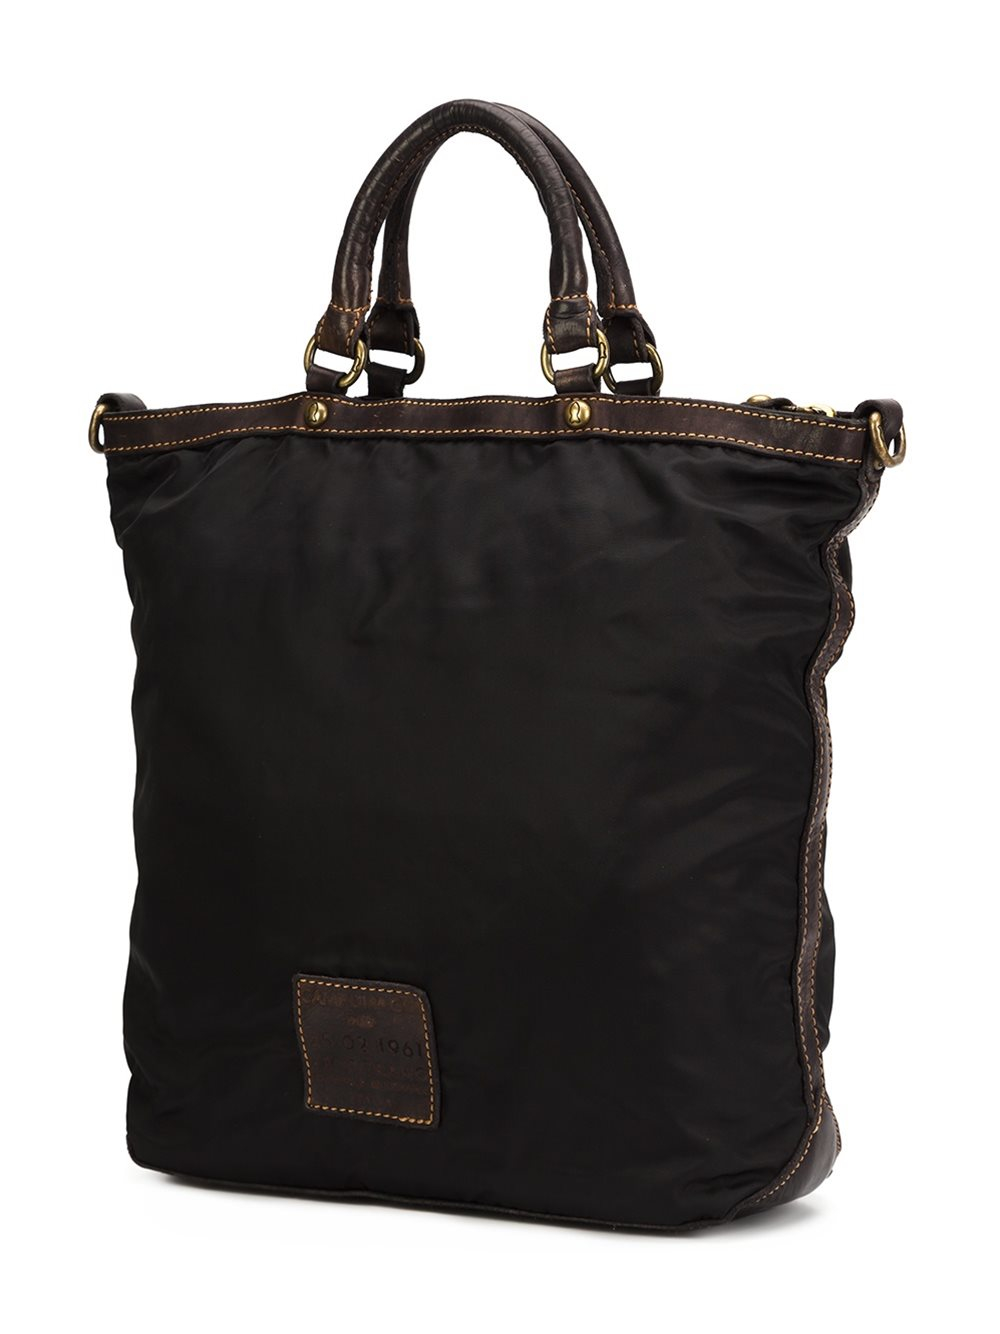 Lyst - Campomaggi Large Tote Bag in Black